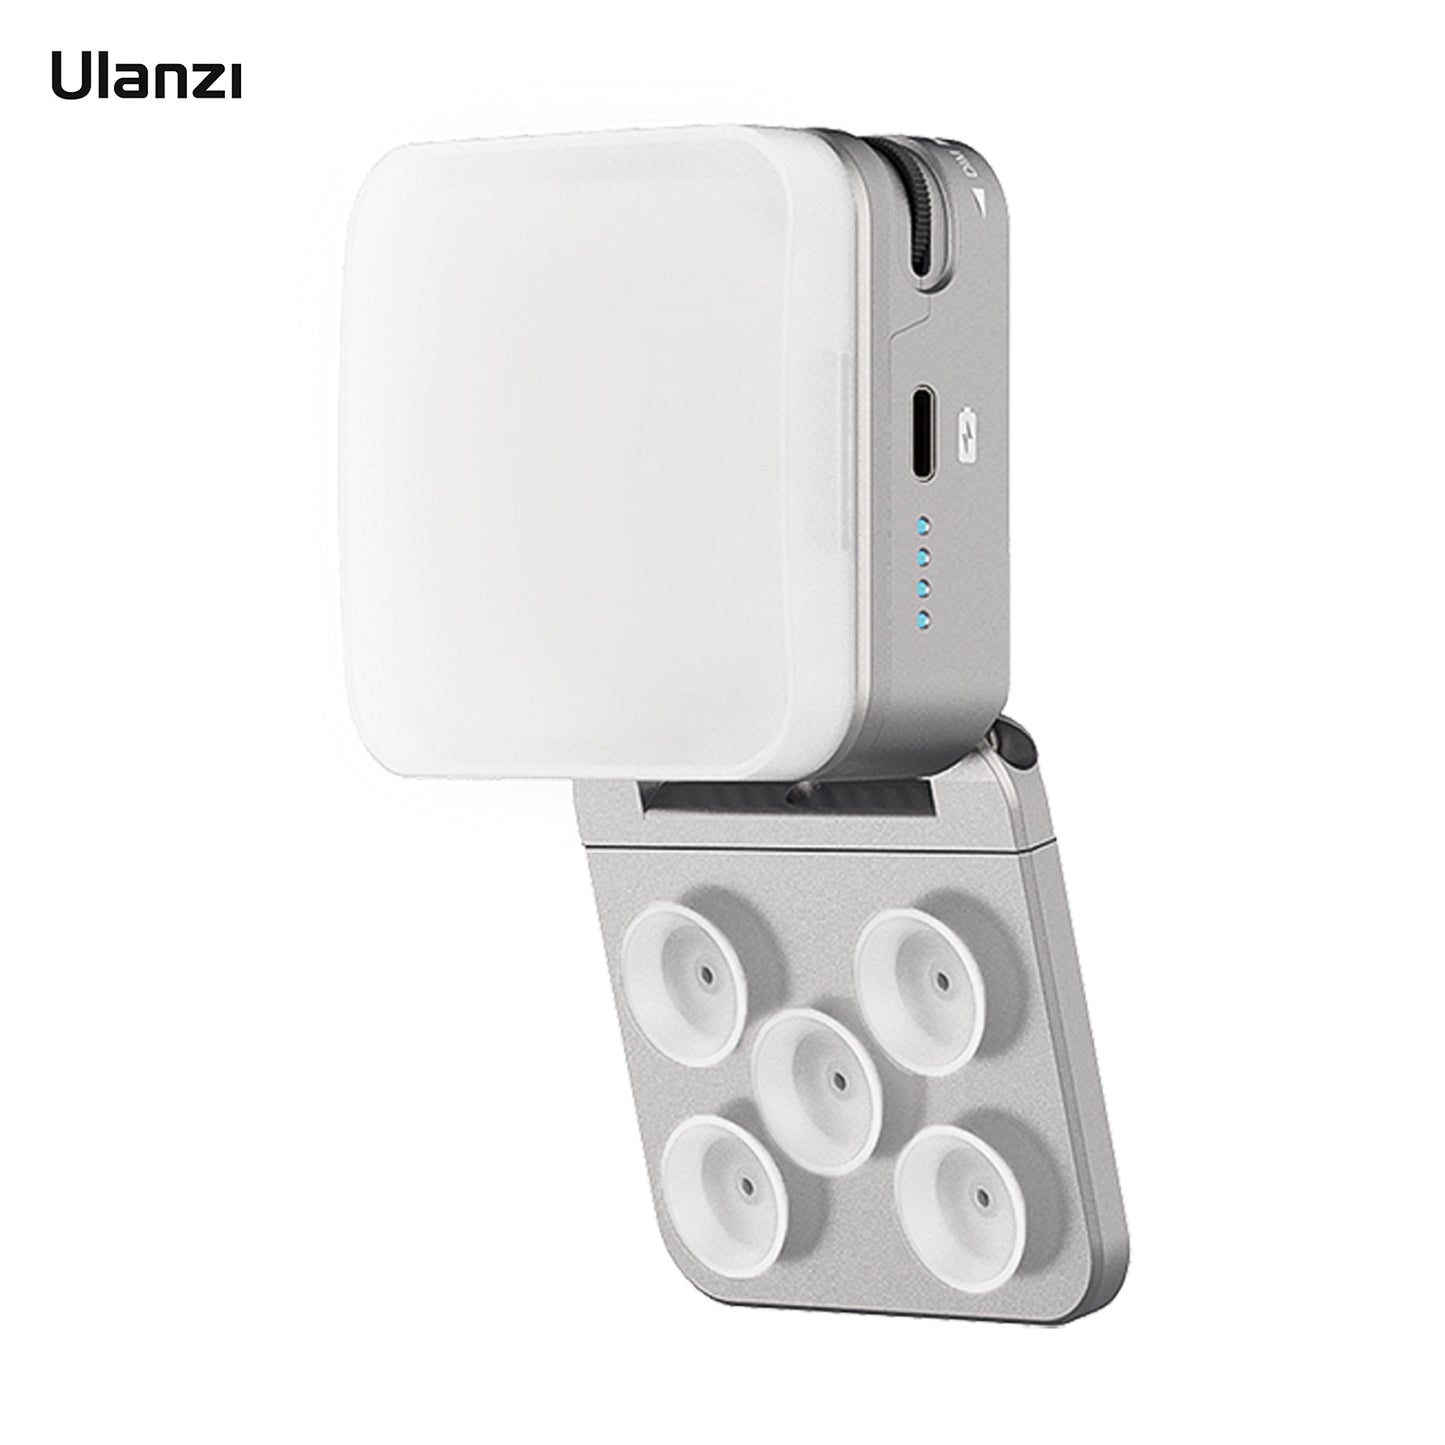 Ulanzi CL15 Mini LED Video Light For Laptop Video Conference Lighting